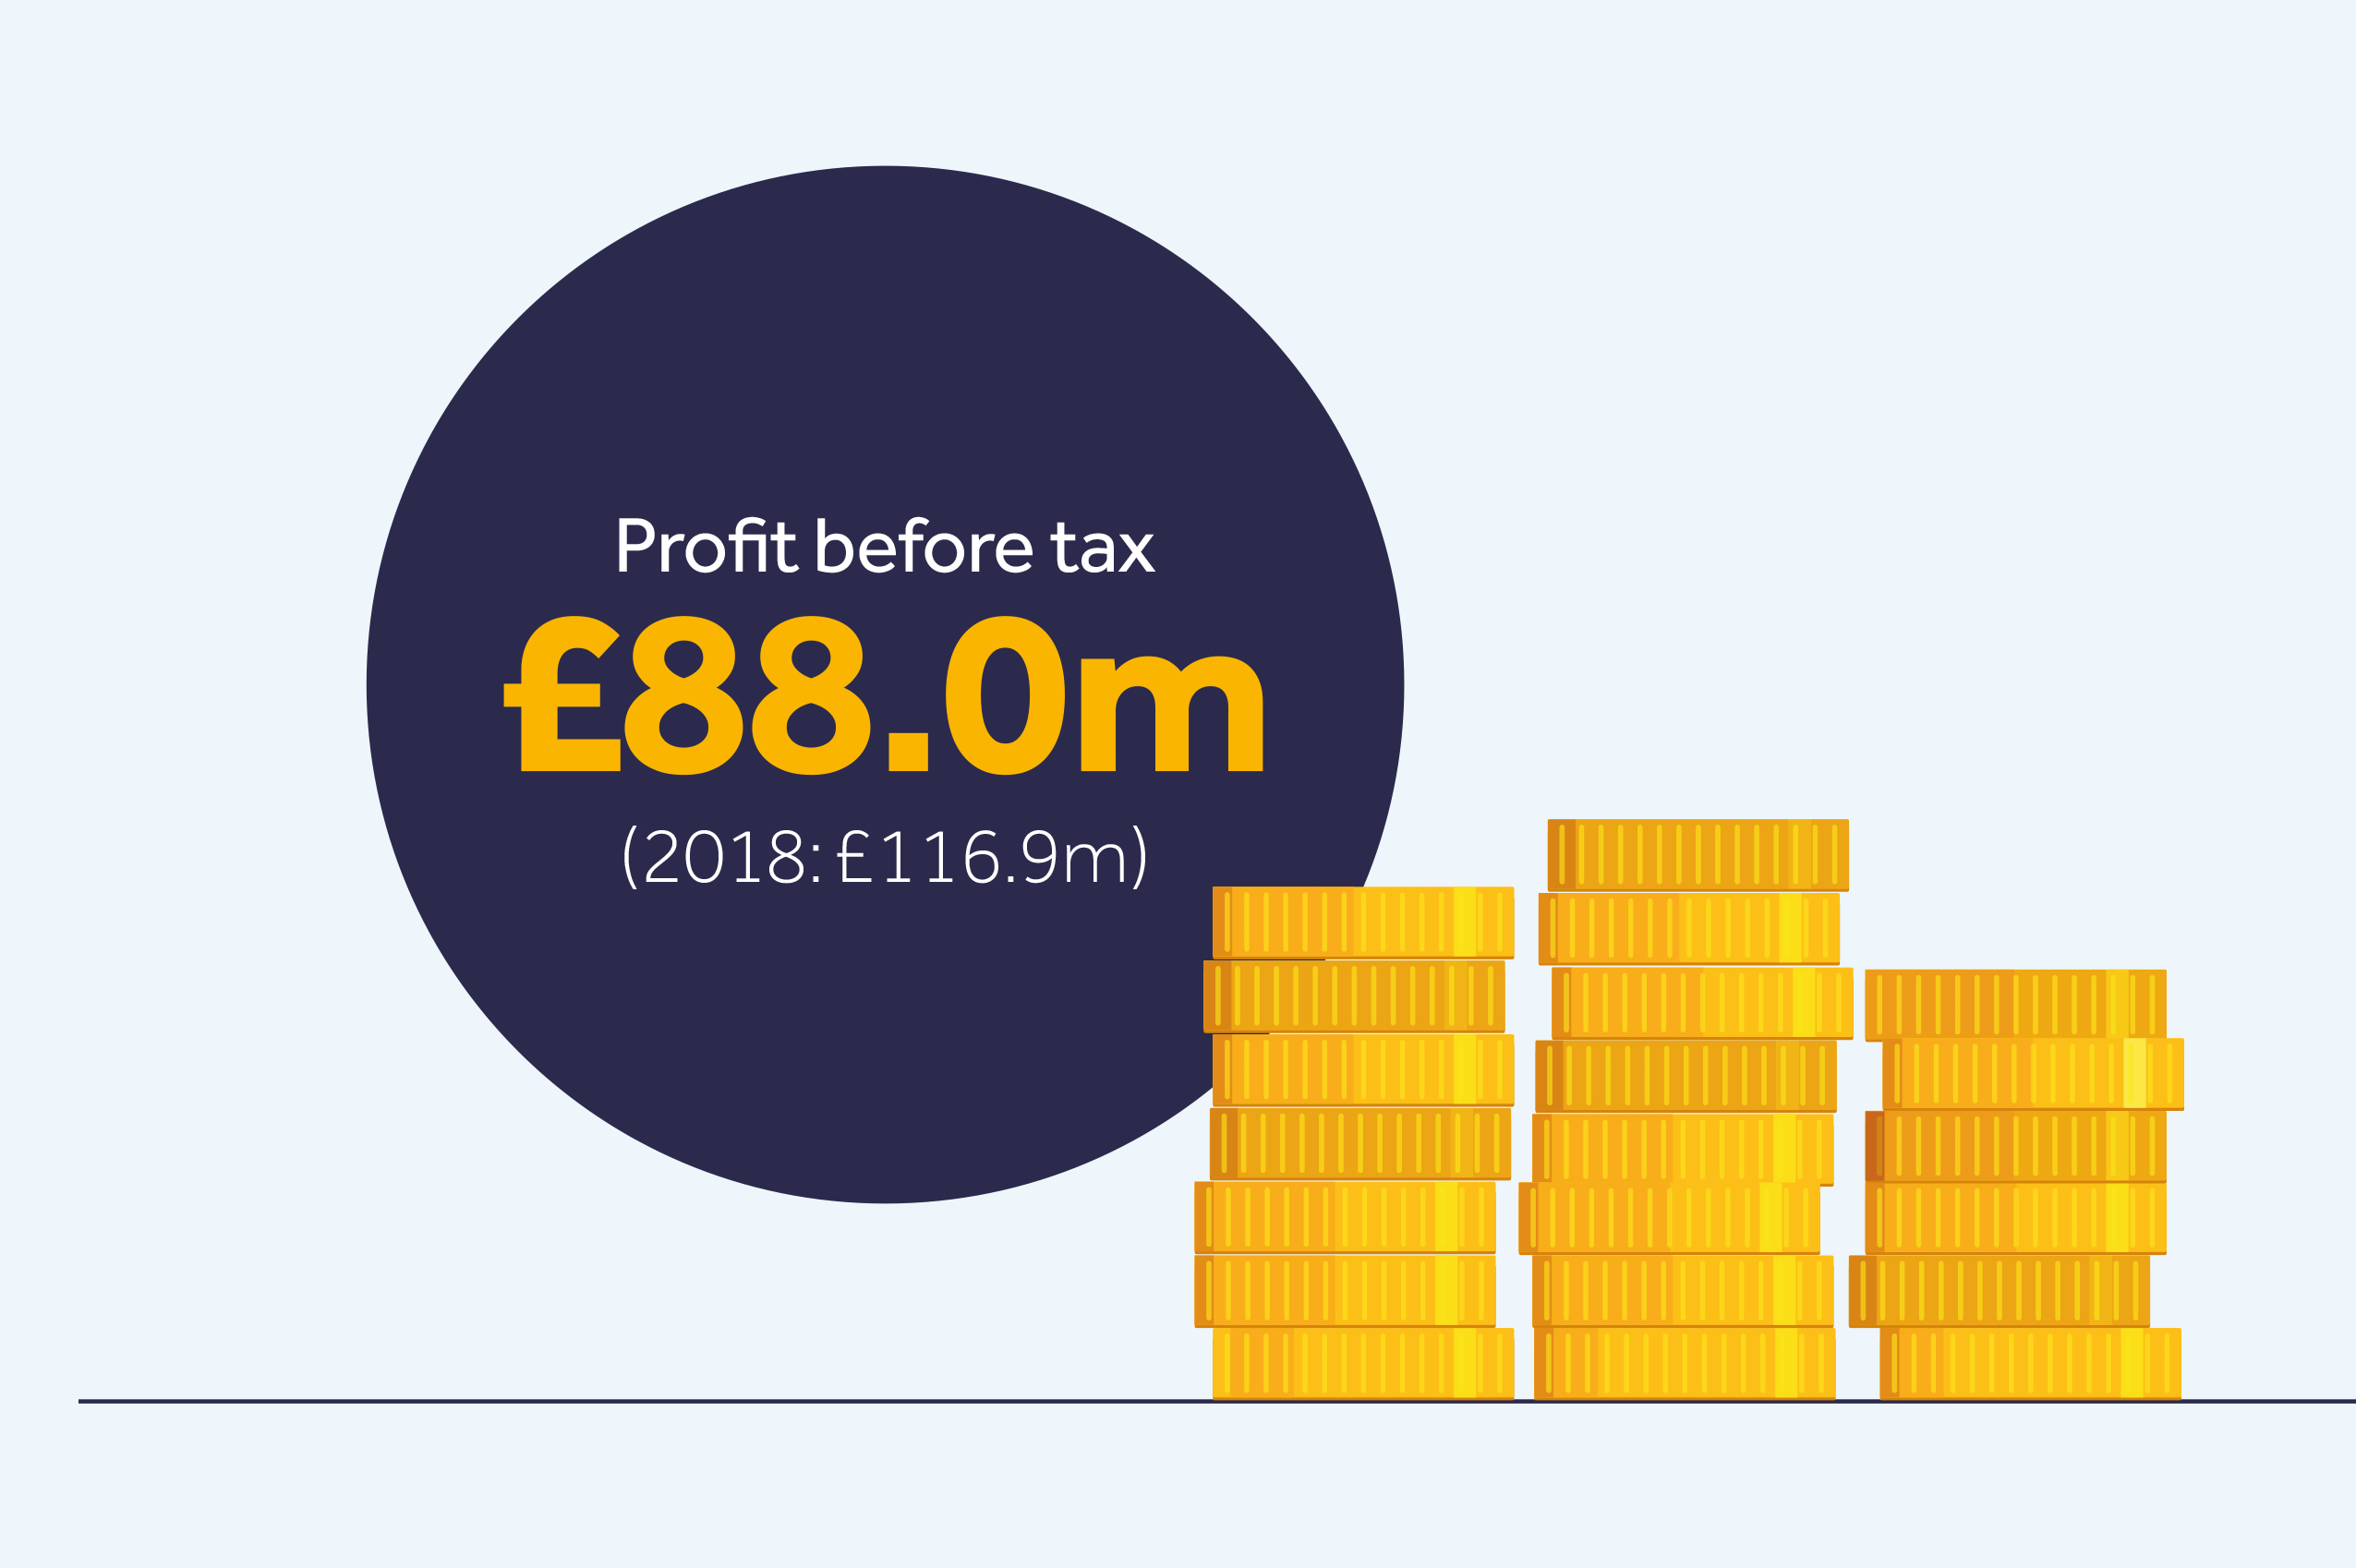 profit before tax of £88 million